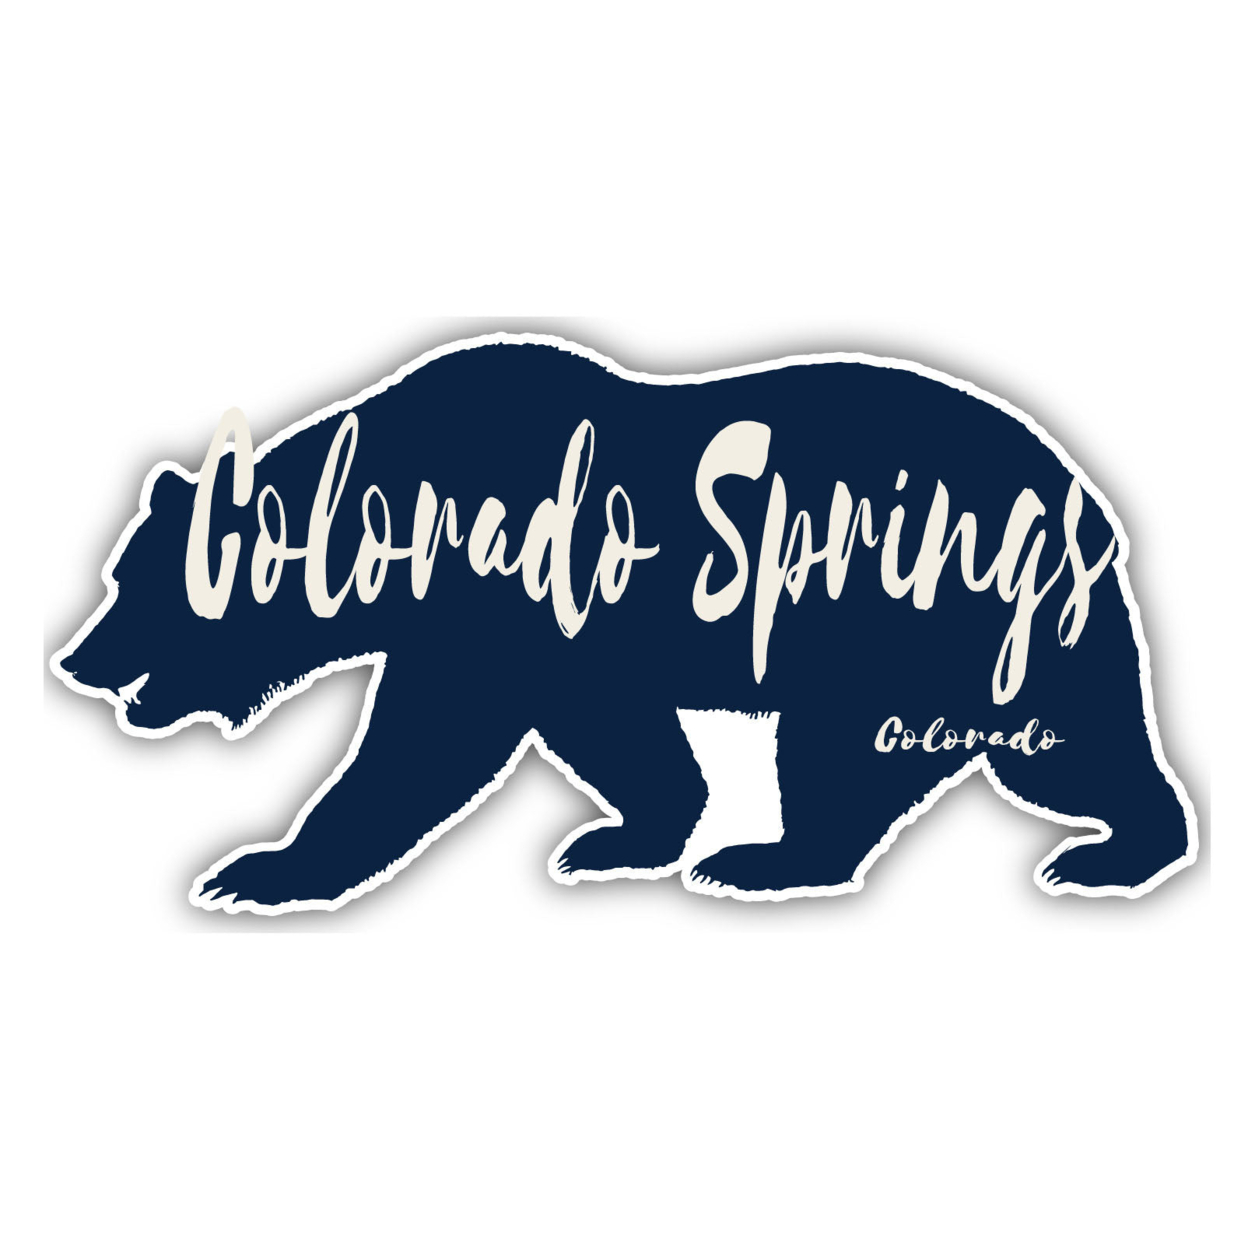 Colorado Springs Colorado Souvenir Decorative Stickers (Choose Theme And Size) - 4-Pack, 4-Inch, Adventures Awaits